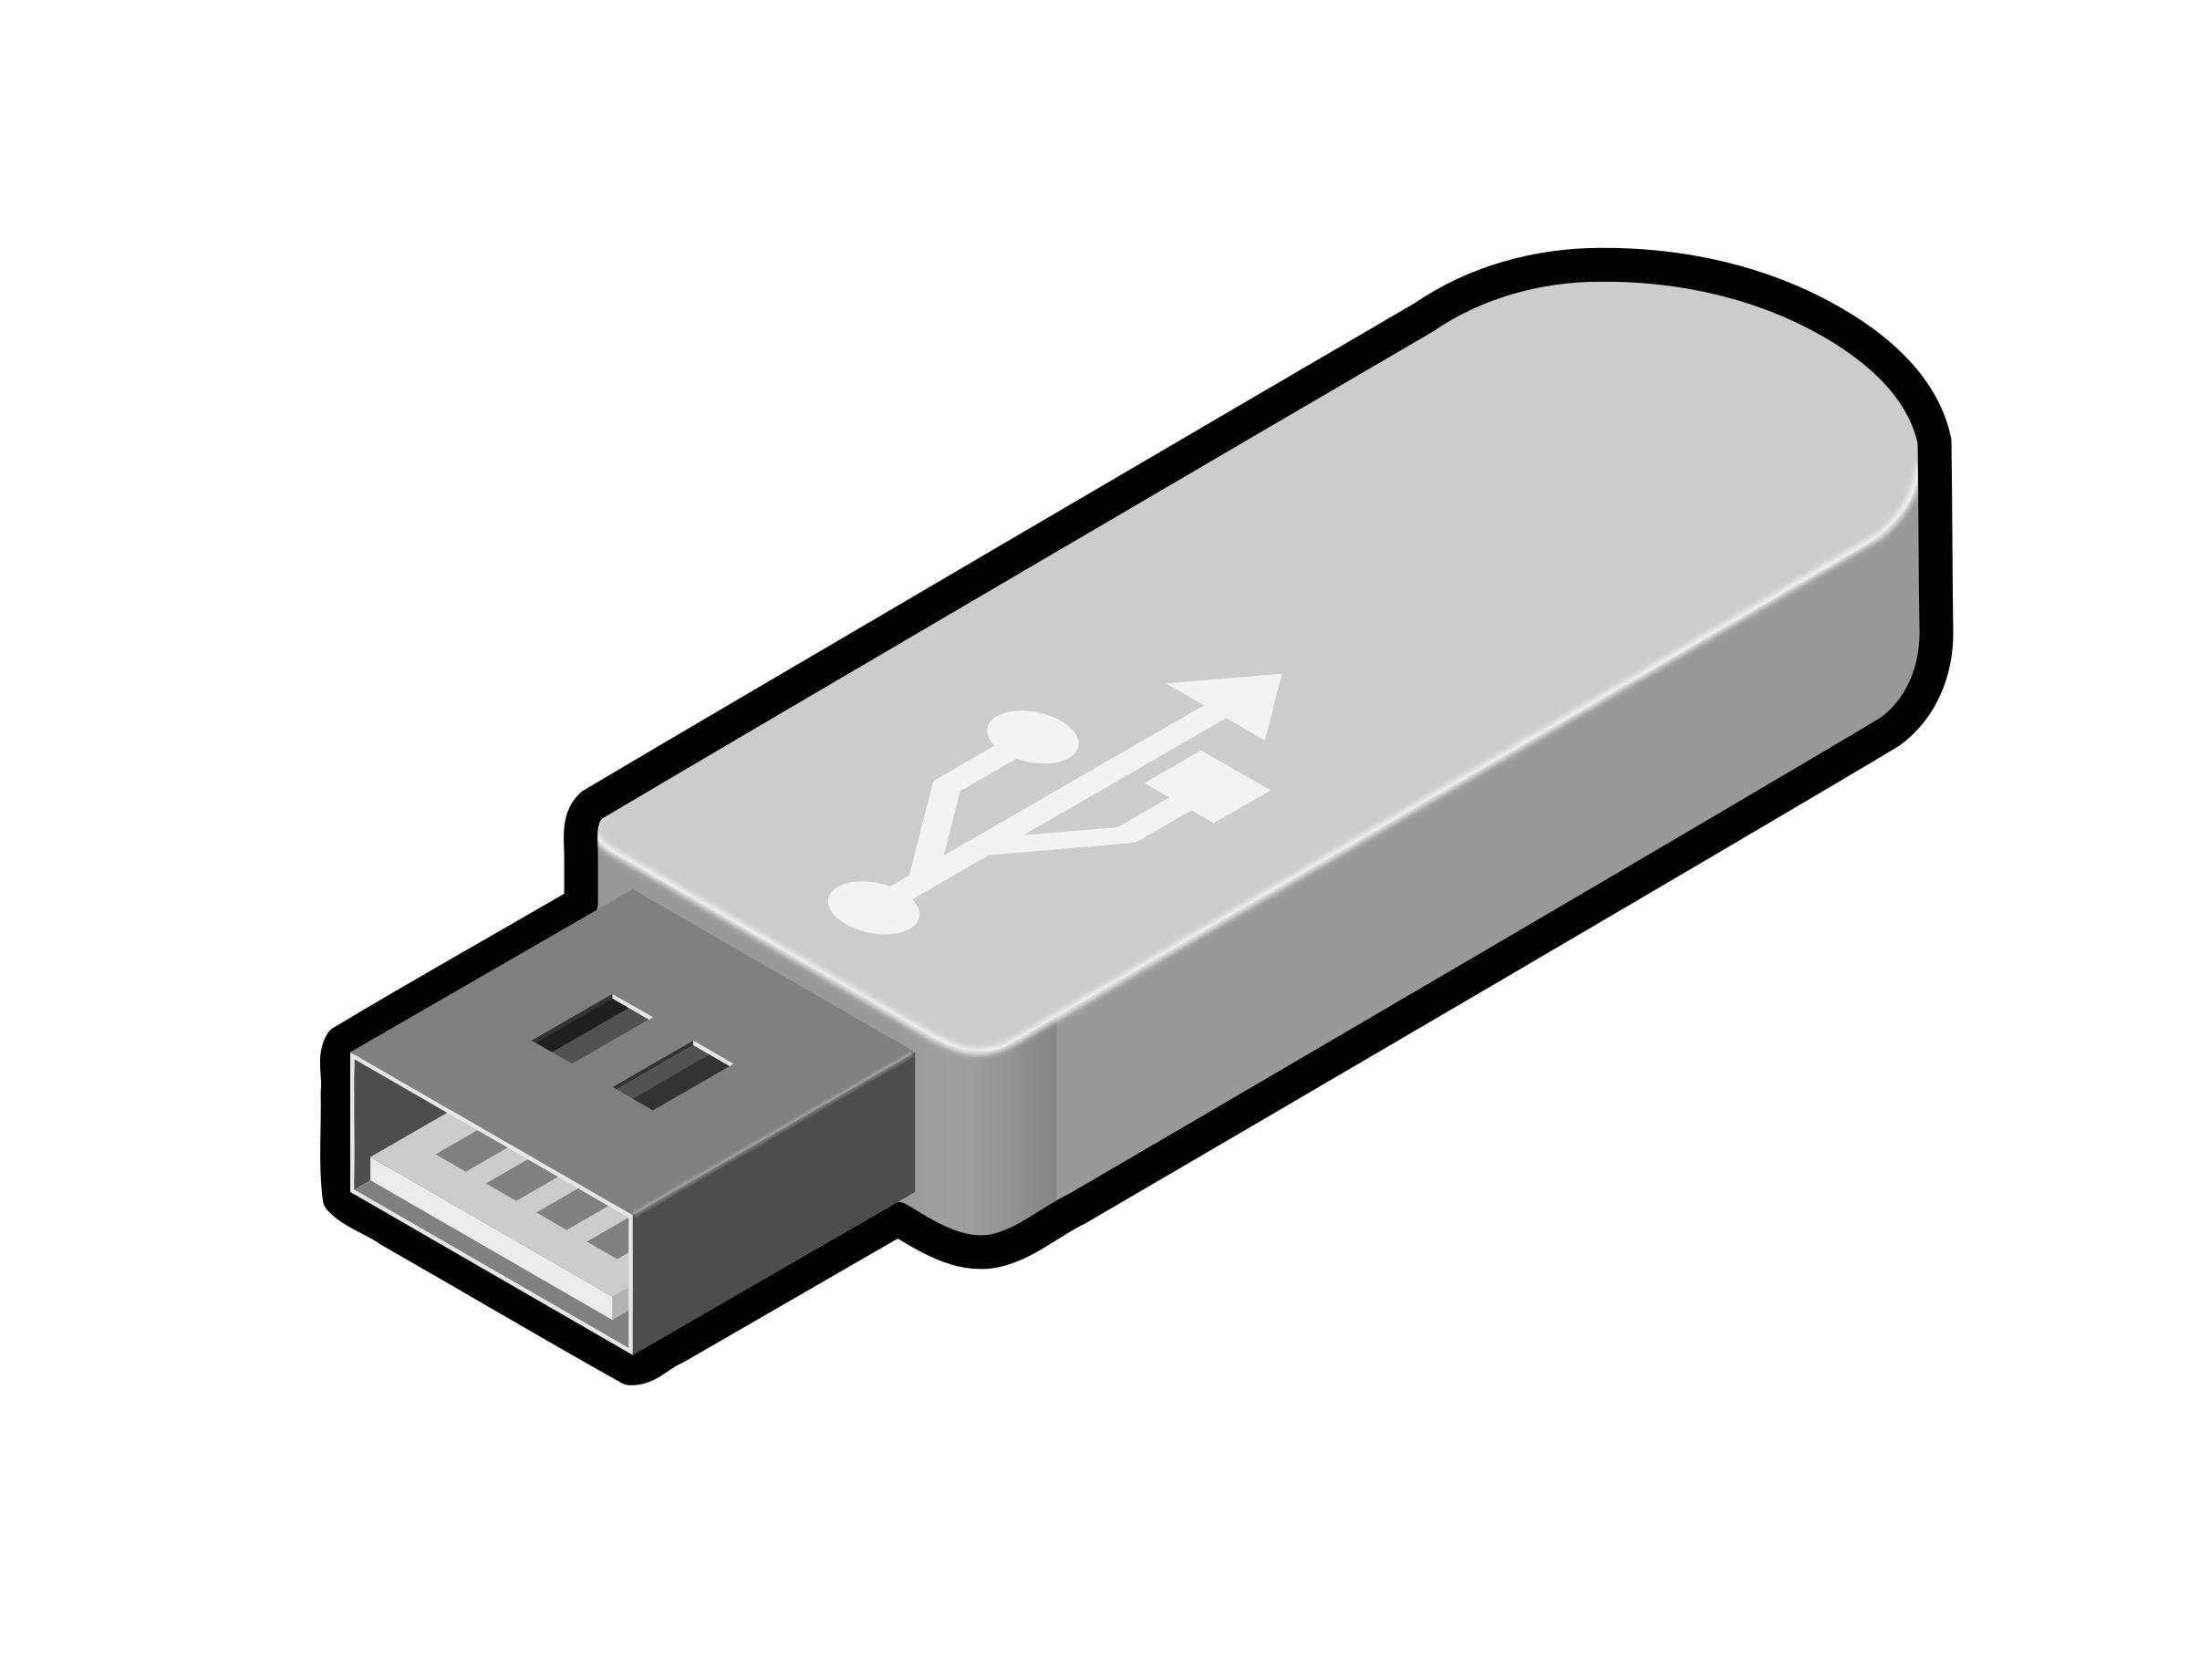 USB Thumb Drive 2 PNG icons